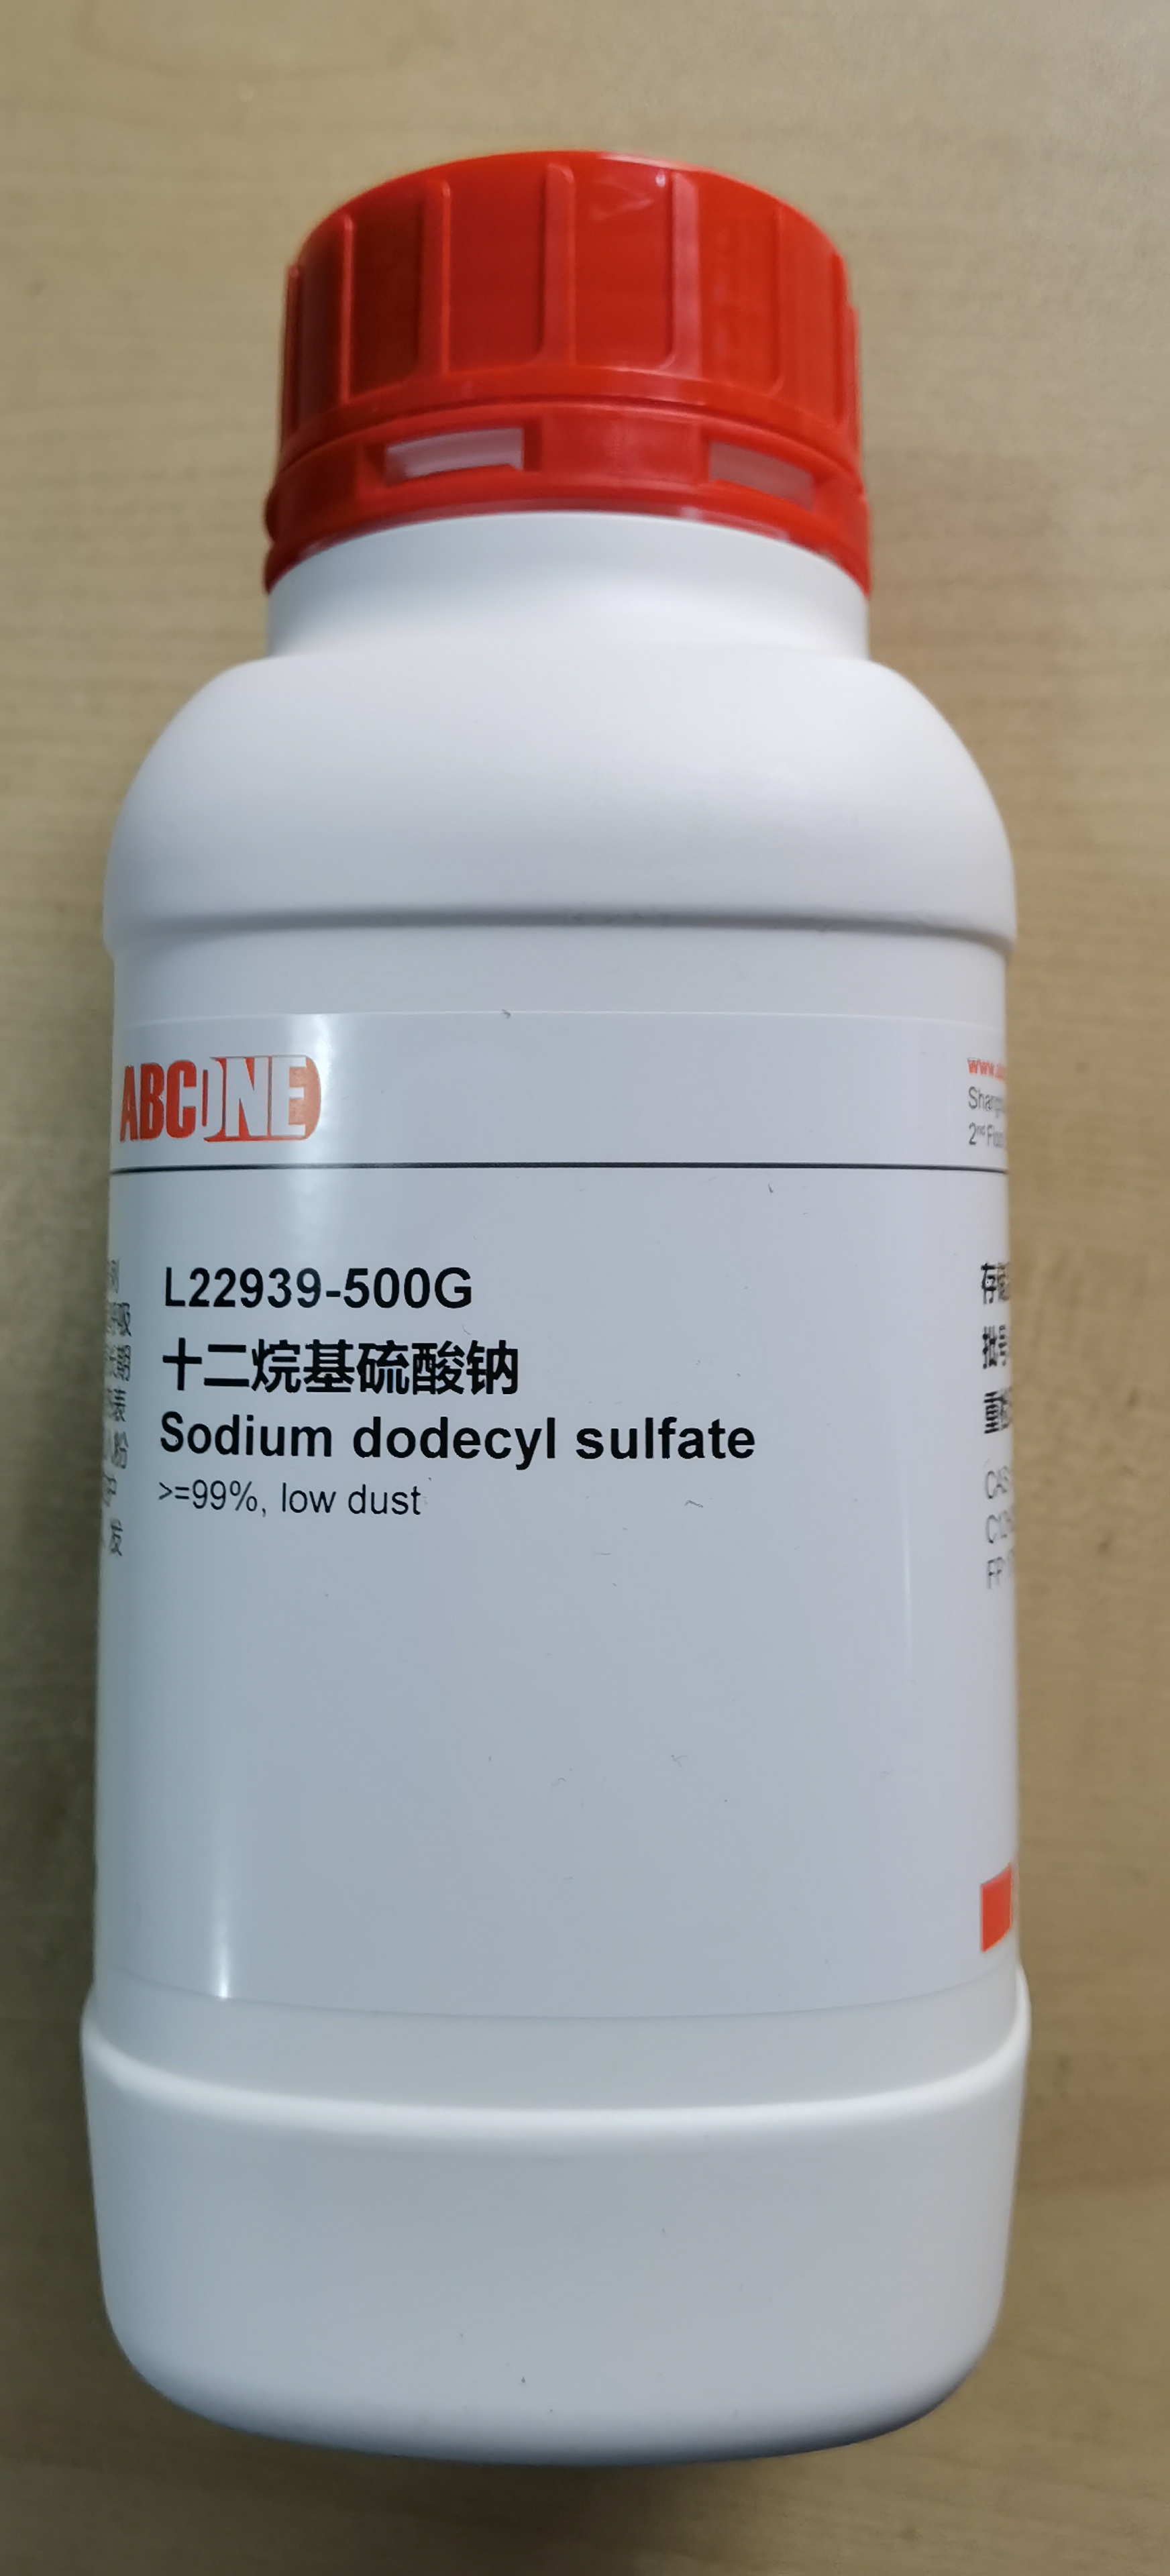 L22939， SDS|Sodium dodecyl sulfate ，十二烷基硫酸钠